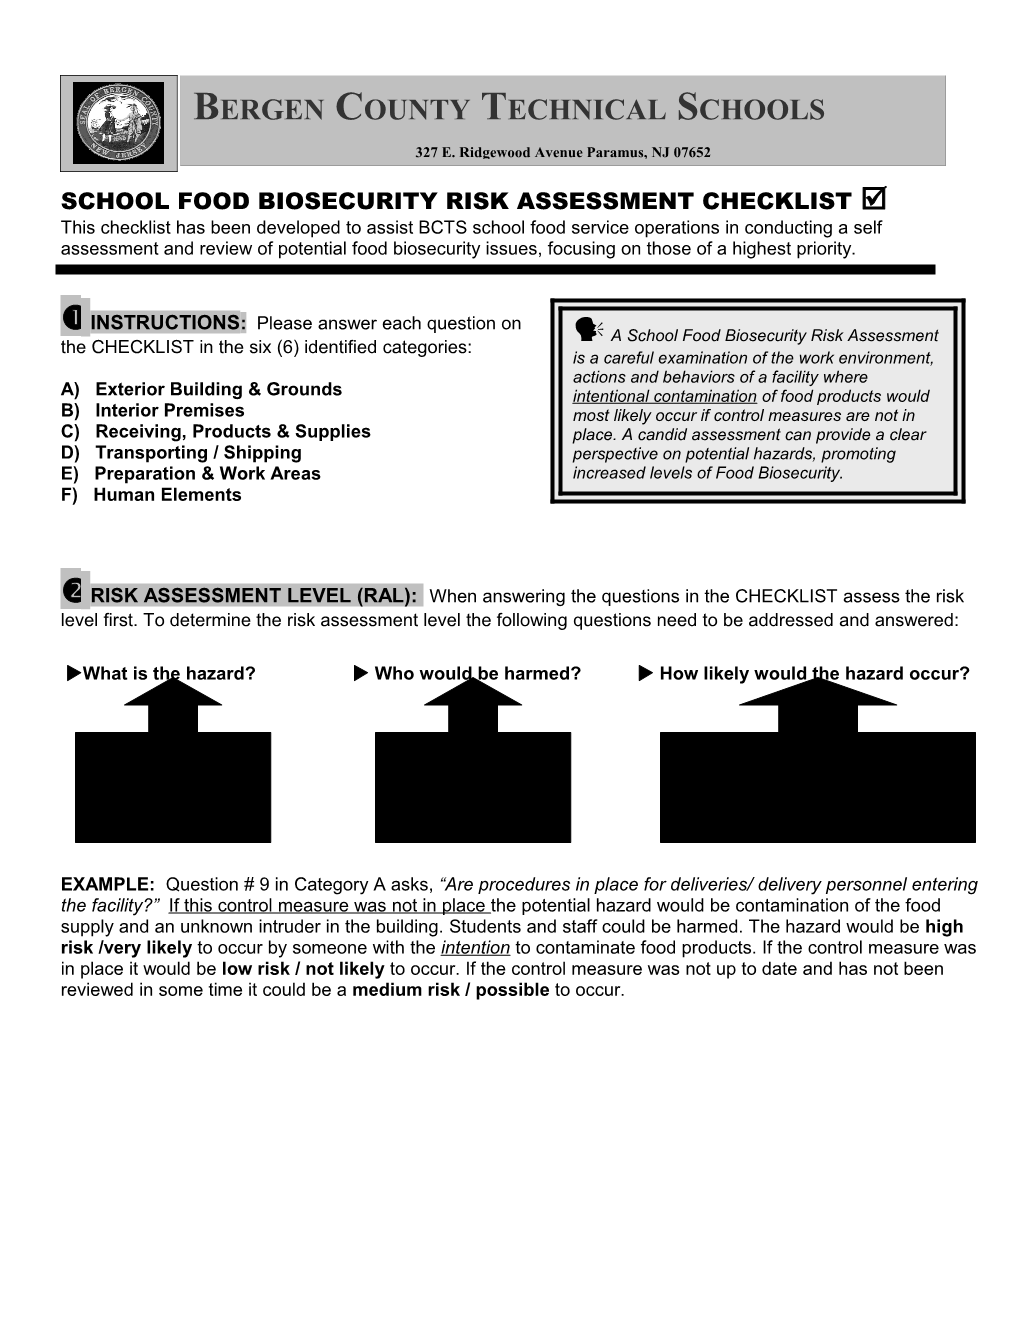 School Food Biosecurity Risk Assessment Checklist